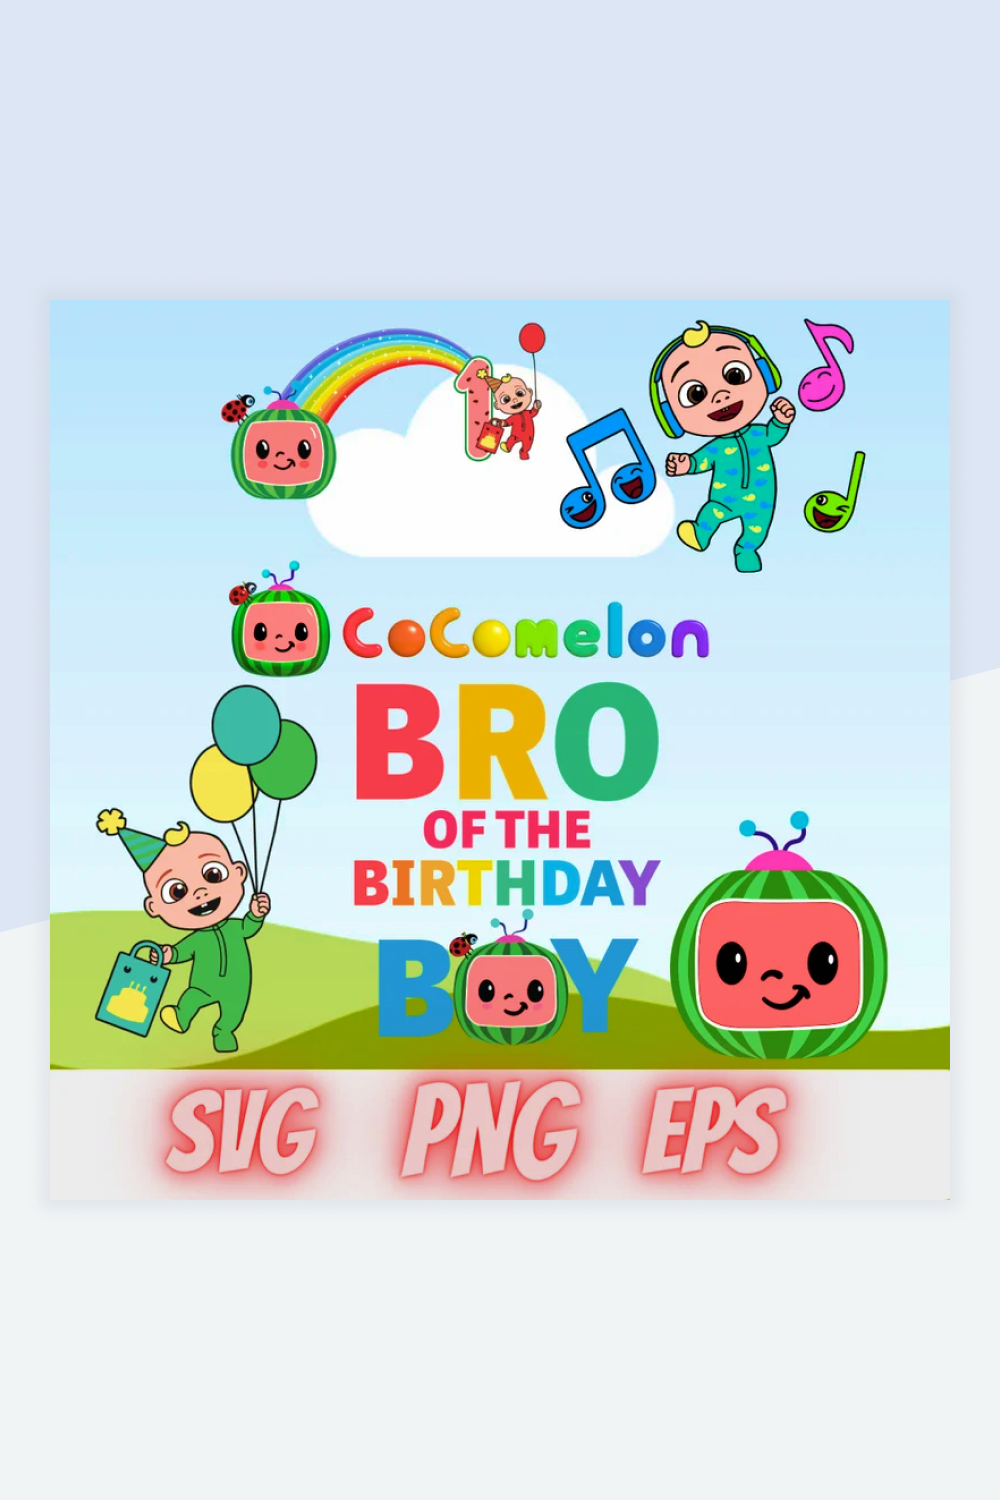 Cocomelon Family svg, Cocomelon Birthday, Cocomelon logo, Co - Inspire  Uplift  Baby boy 1st birthday party, 2nd birthday party for boys, Baby  birthday party theme